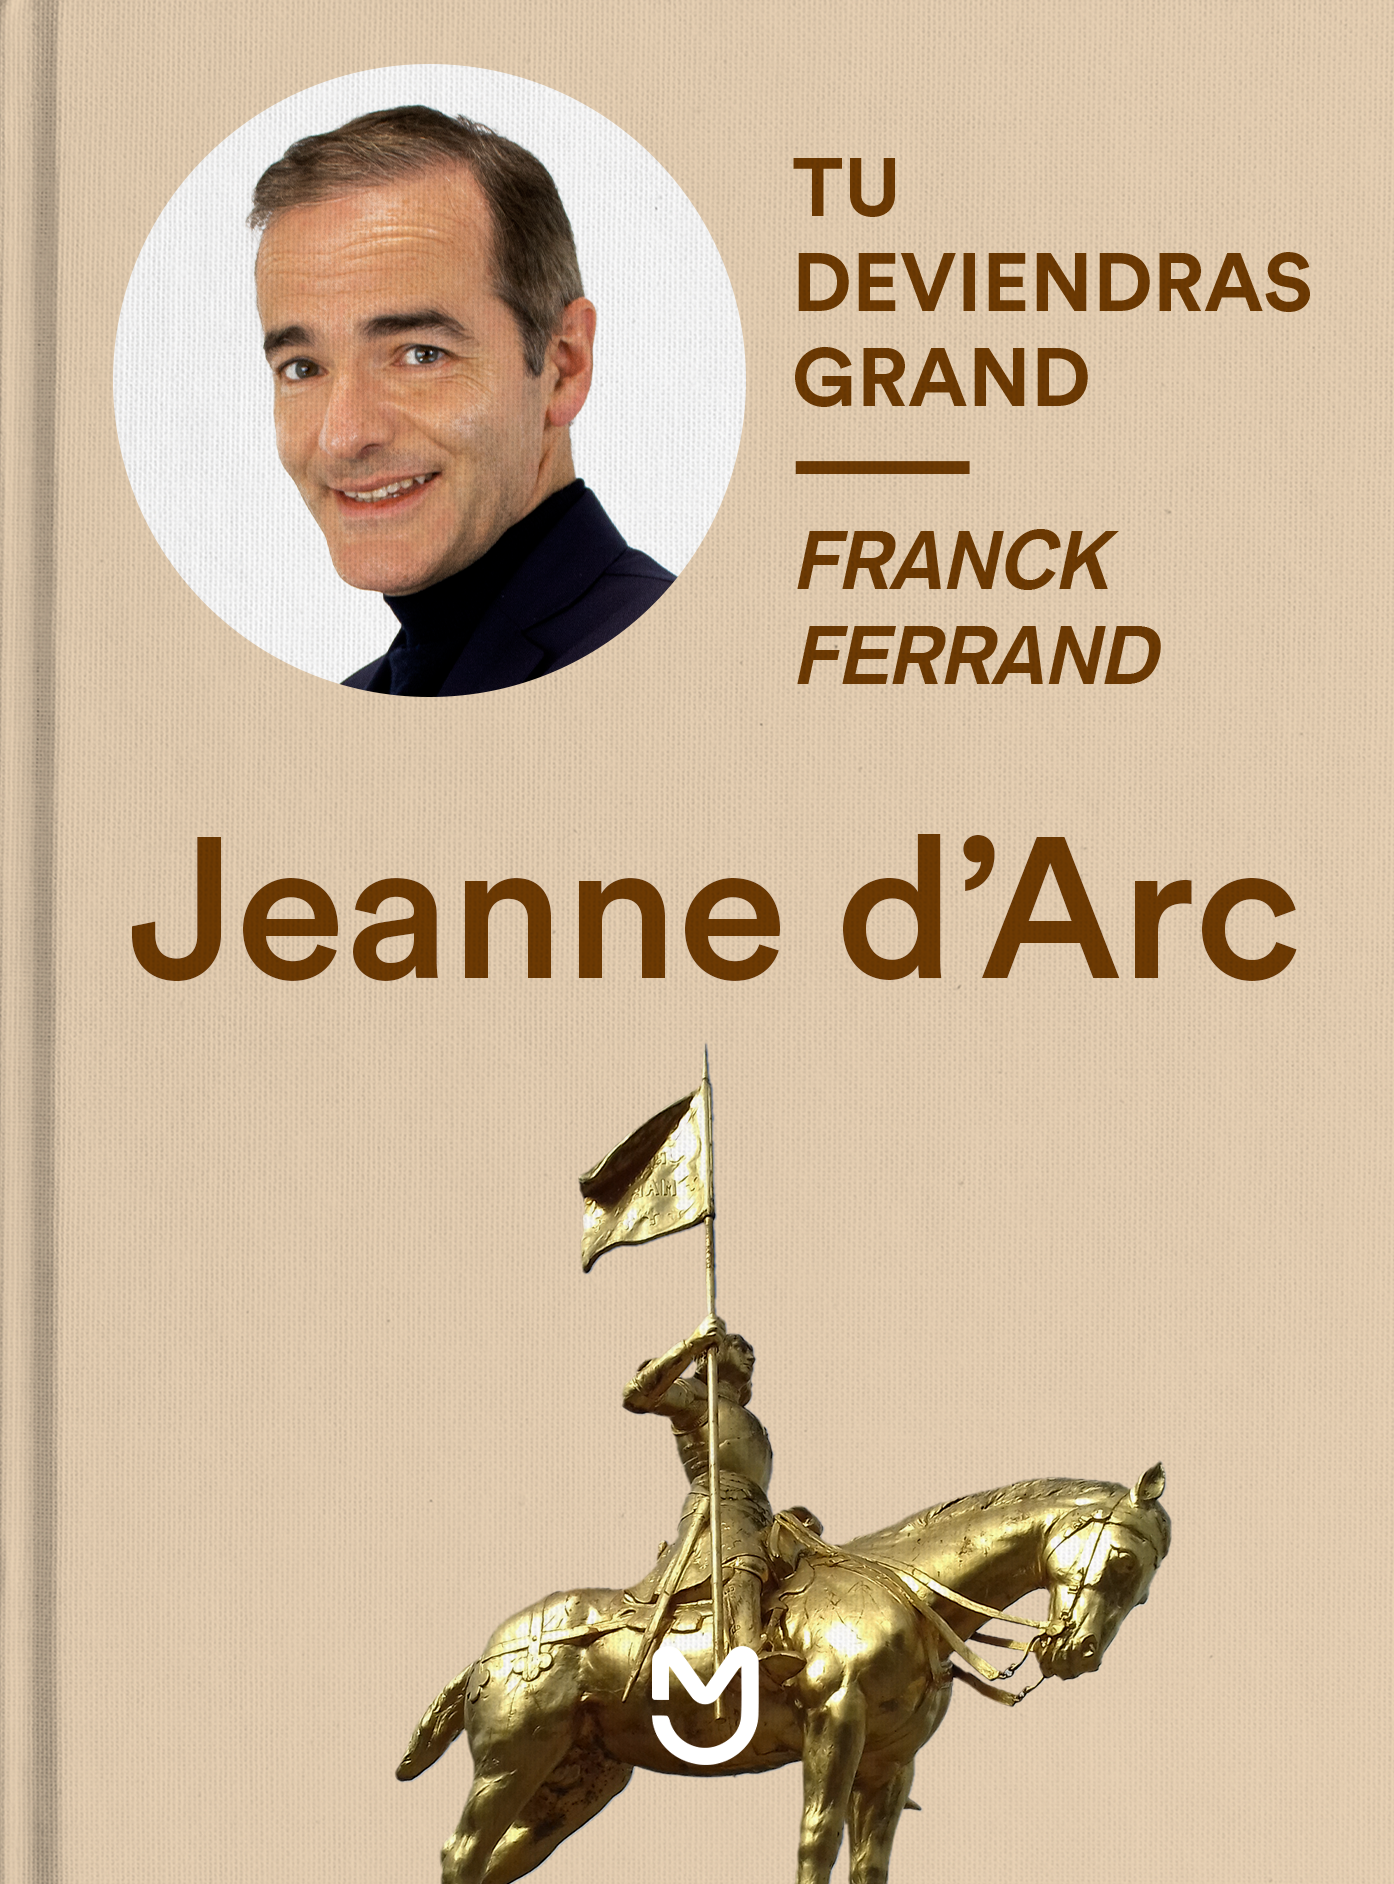 Franck Ferrand, Jeanne d’Arc